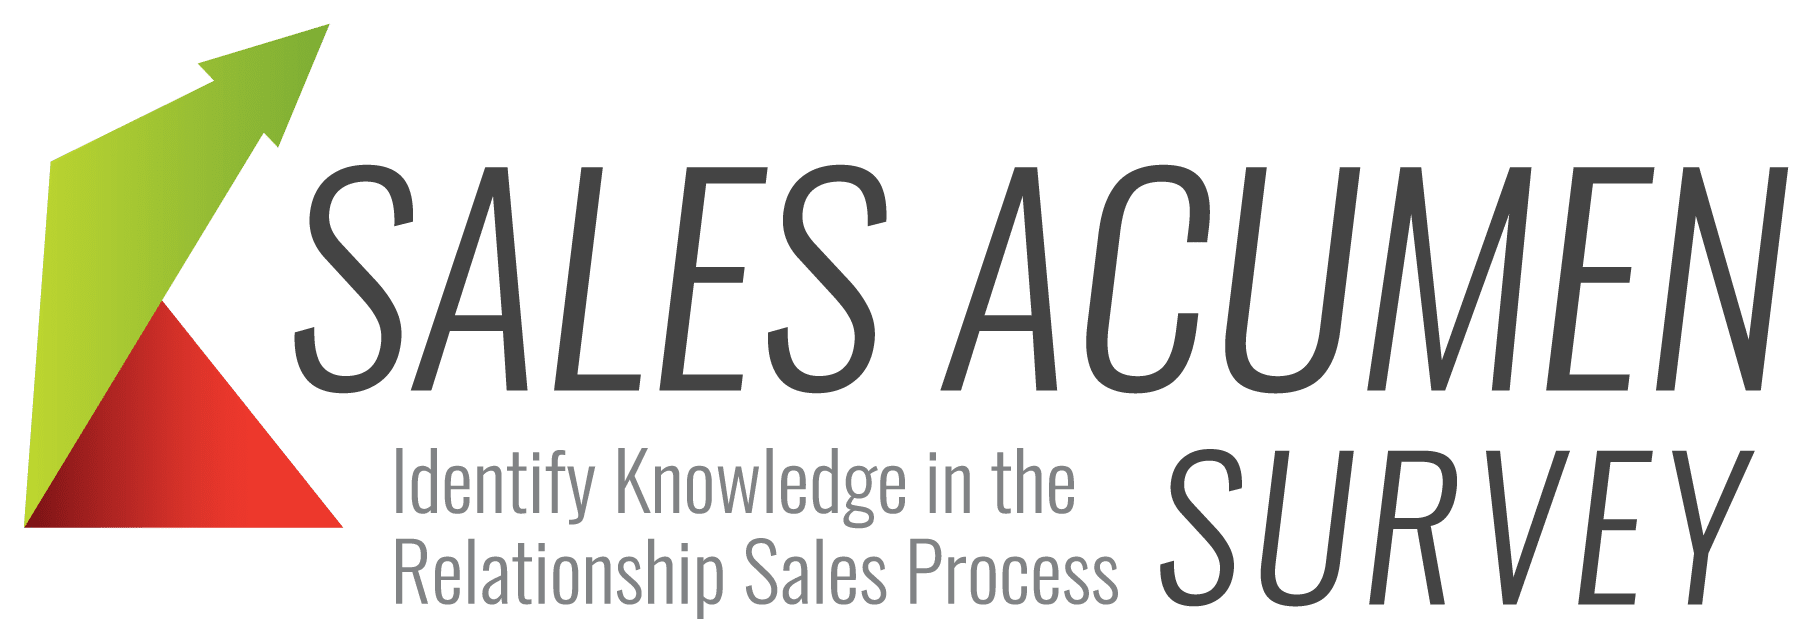 Sales Acumen Survey Logo